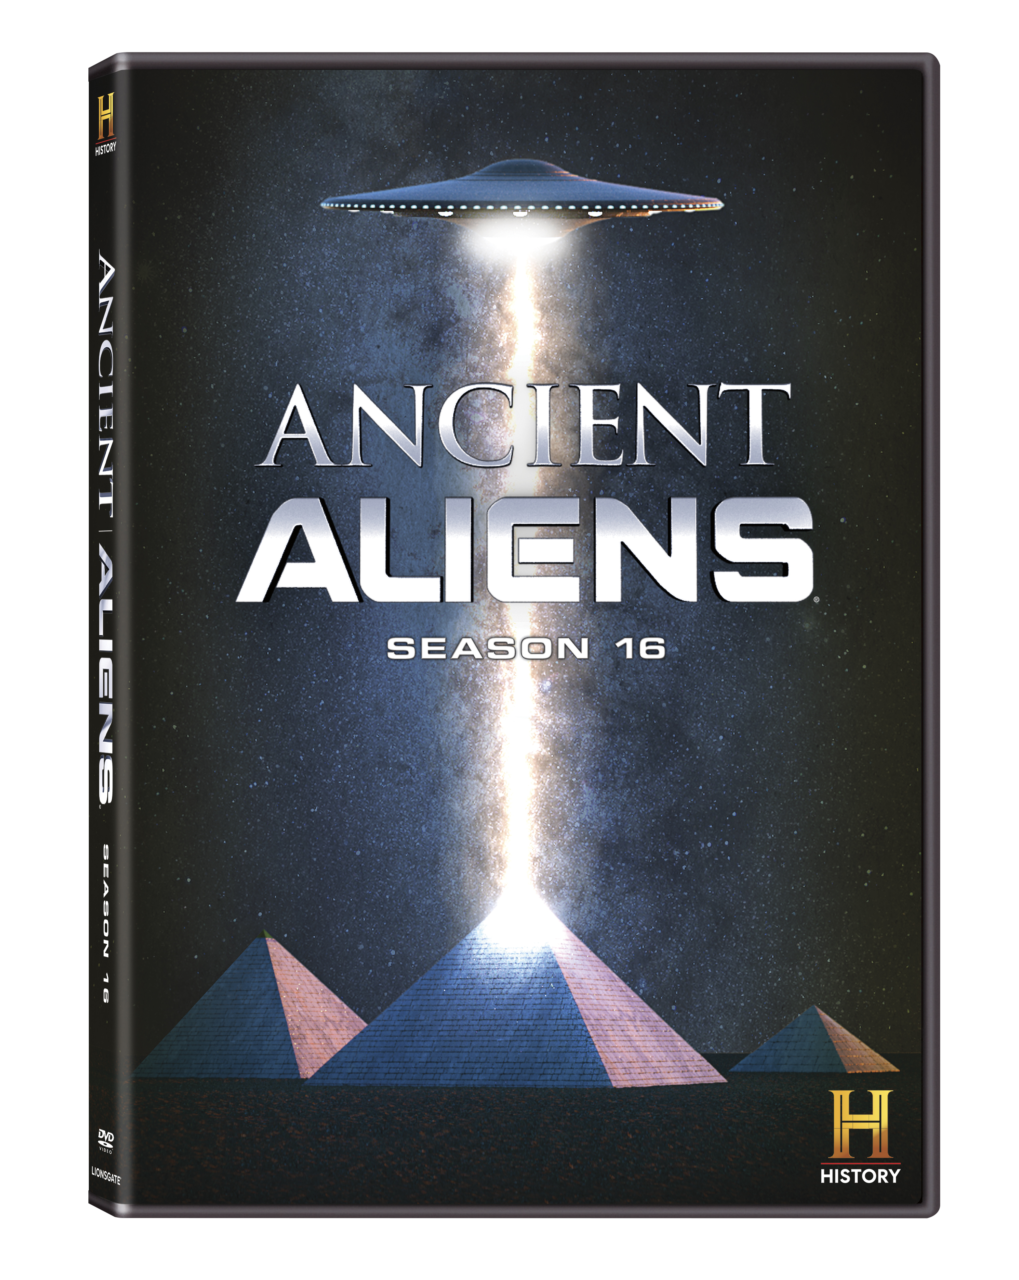 Ancient Aliens Season 16 DVD cover (History/Lionsgate)